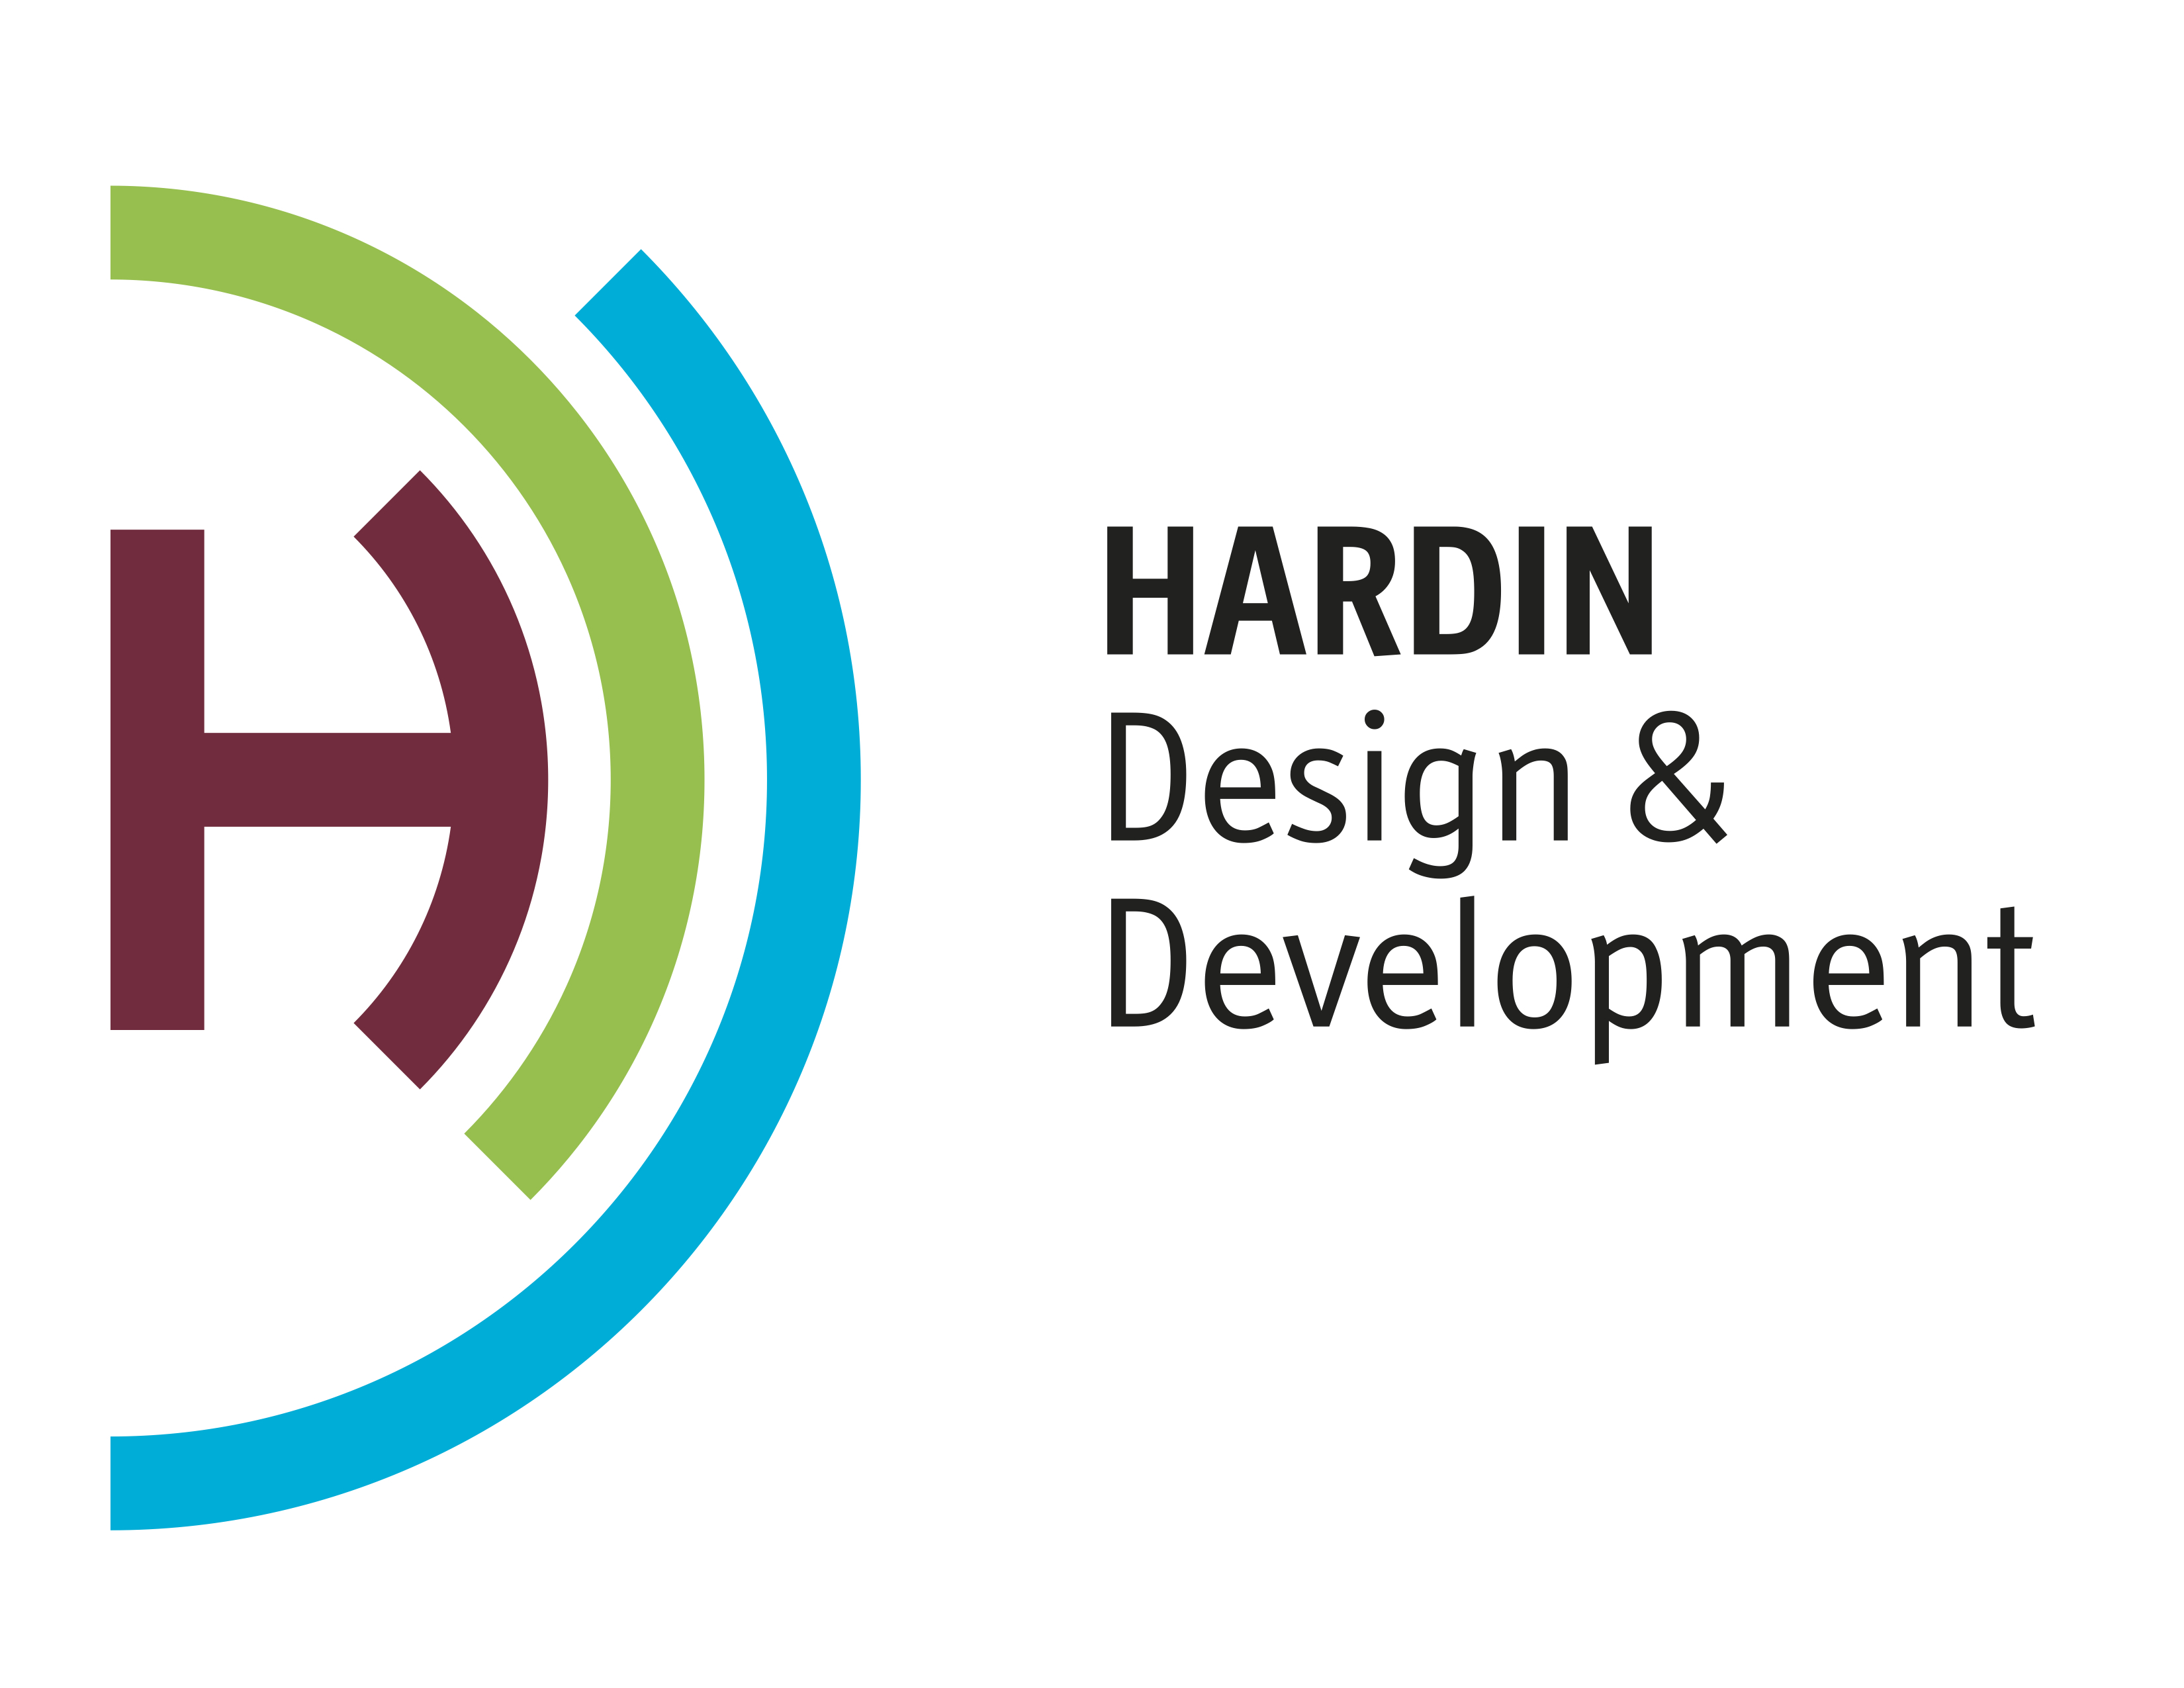 Hardin design and development logo